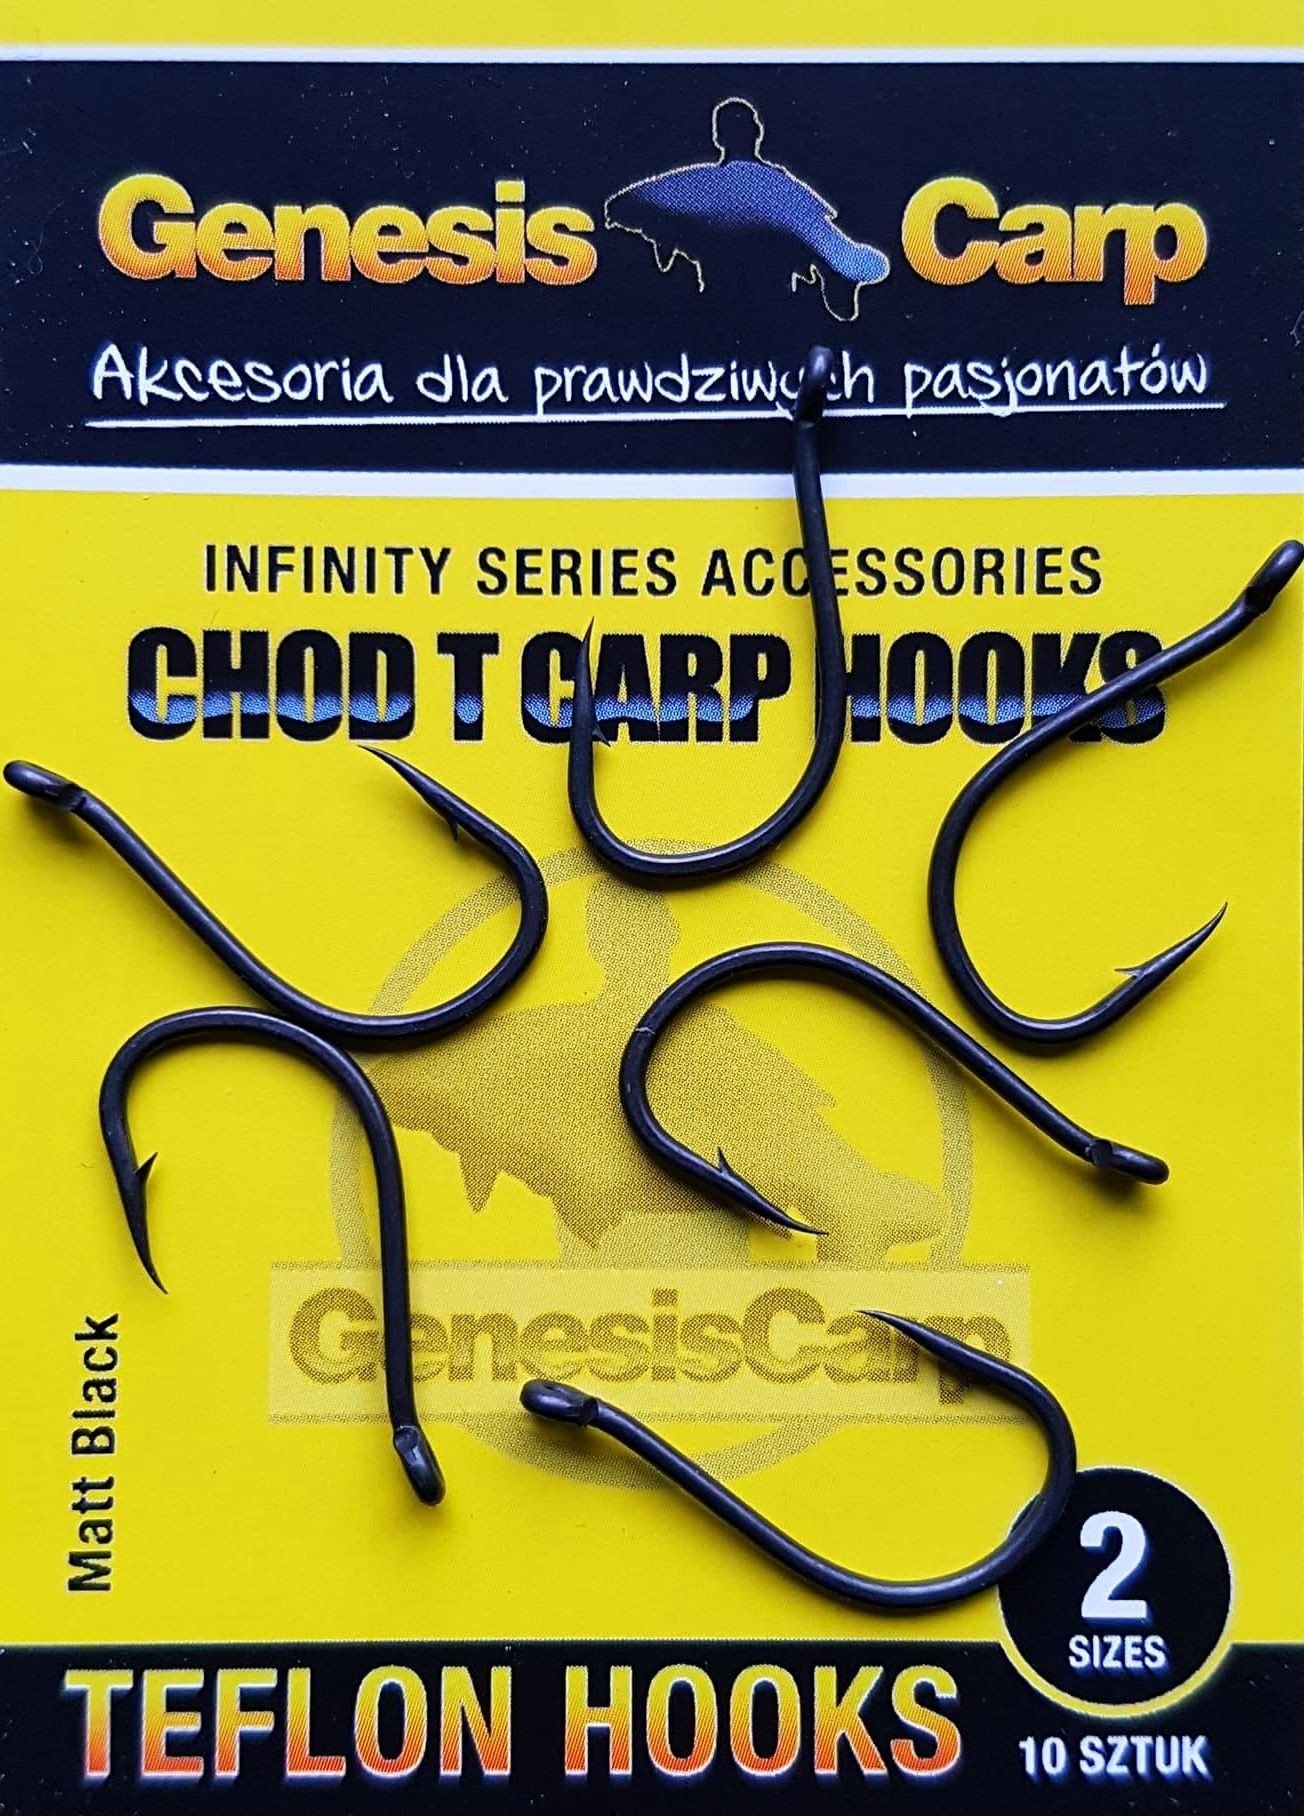 GENESIS CARP Chod T Carp Hooks size 6